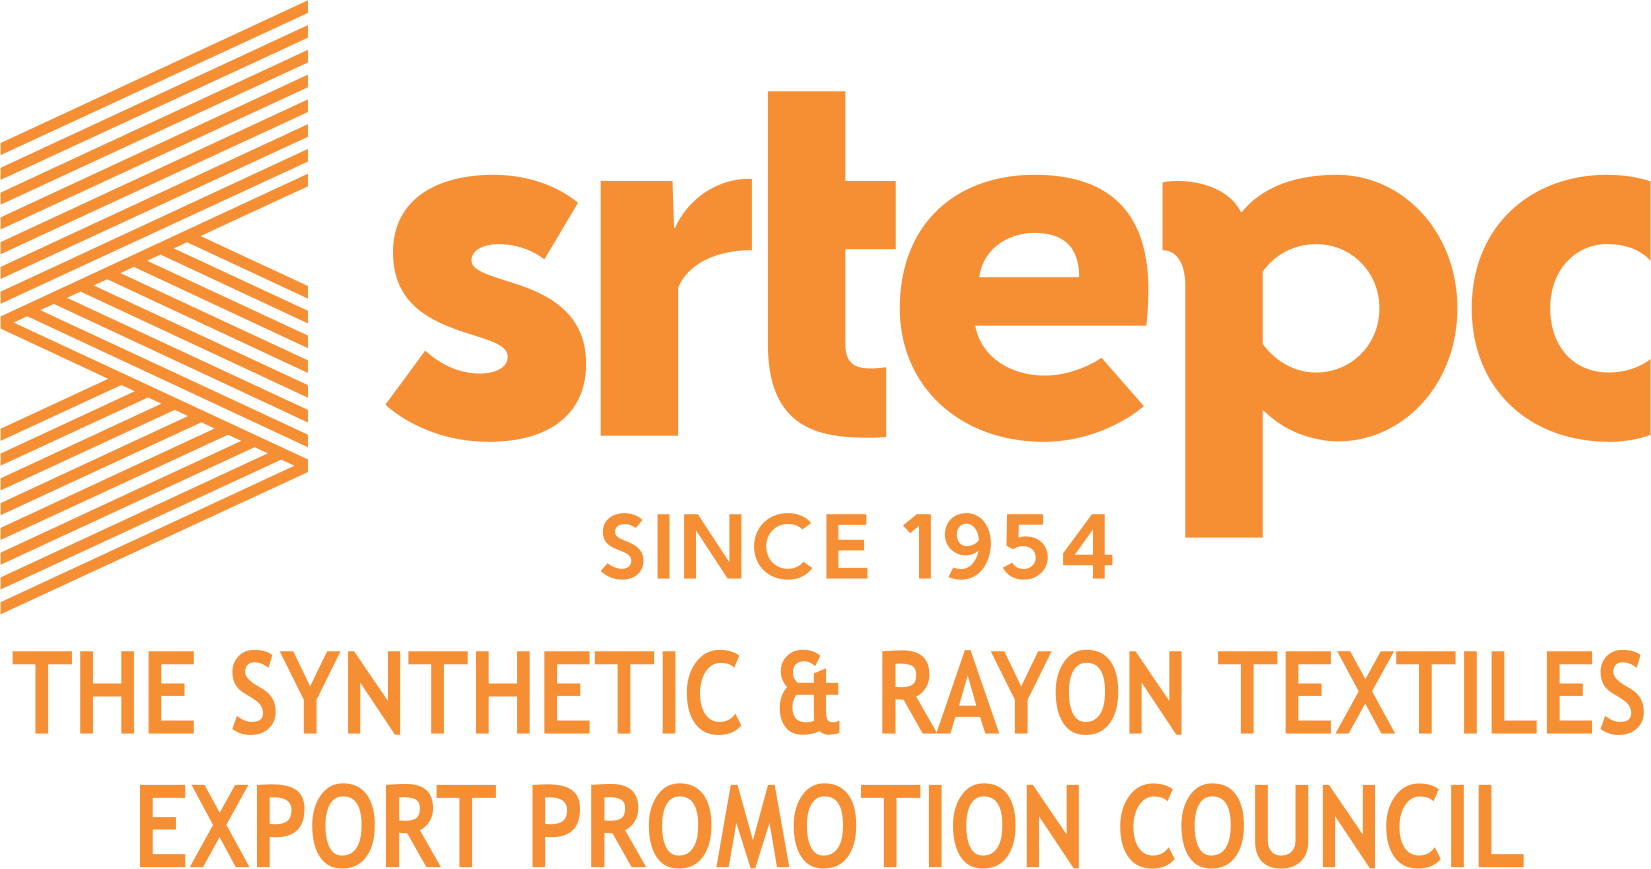 The Synthetic & Rayon Textiles Export Promotion Council (SRTEPC)